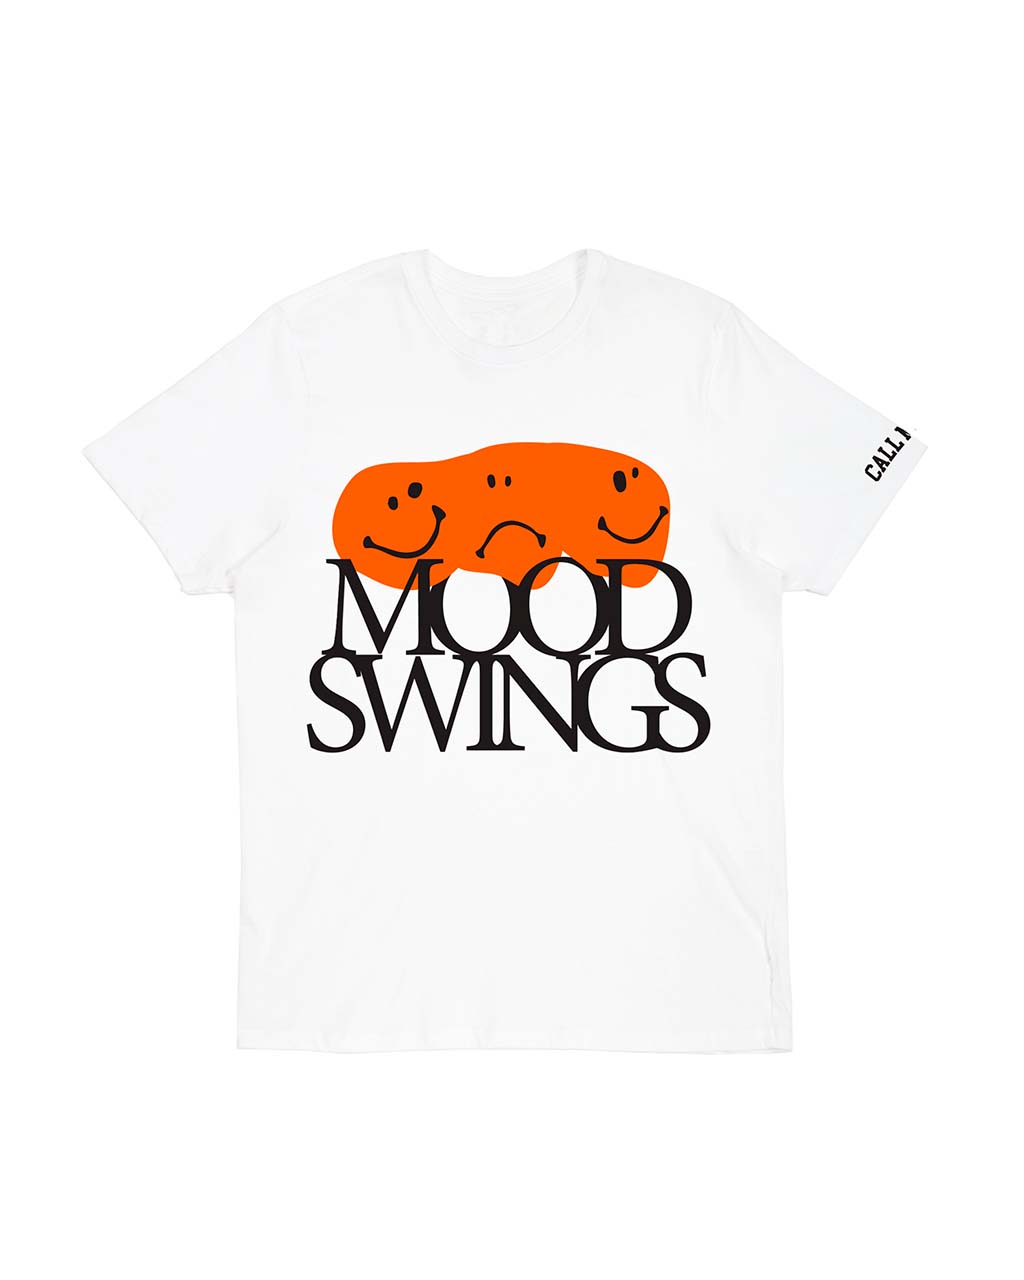 Call Me 917 Mood Swings